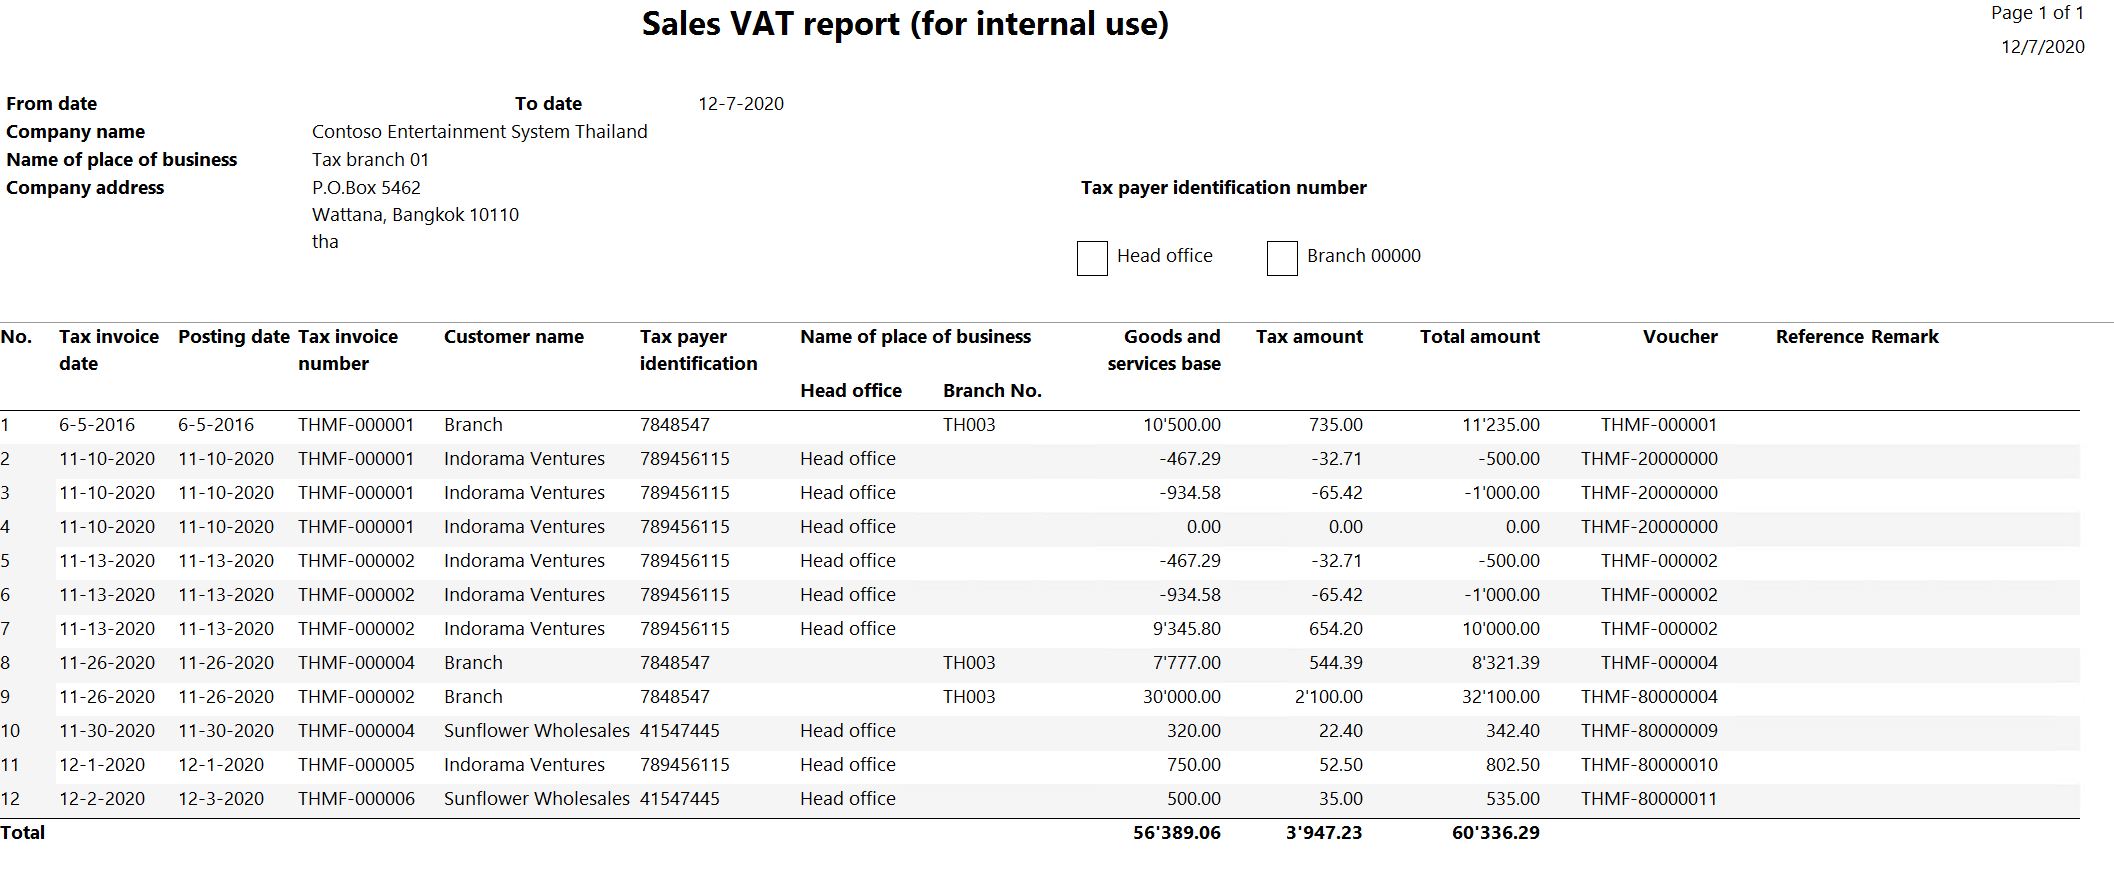 Sales VAT report for internal use .